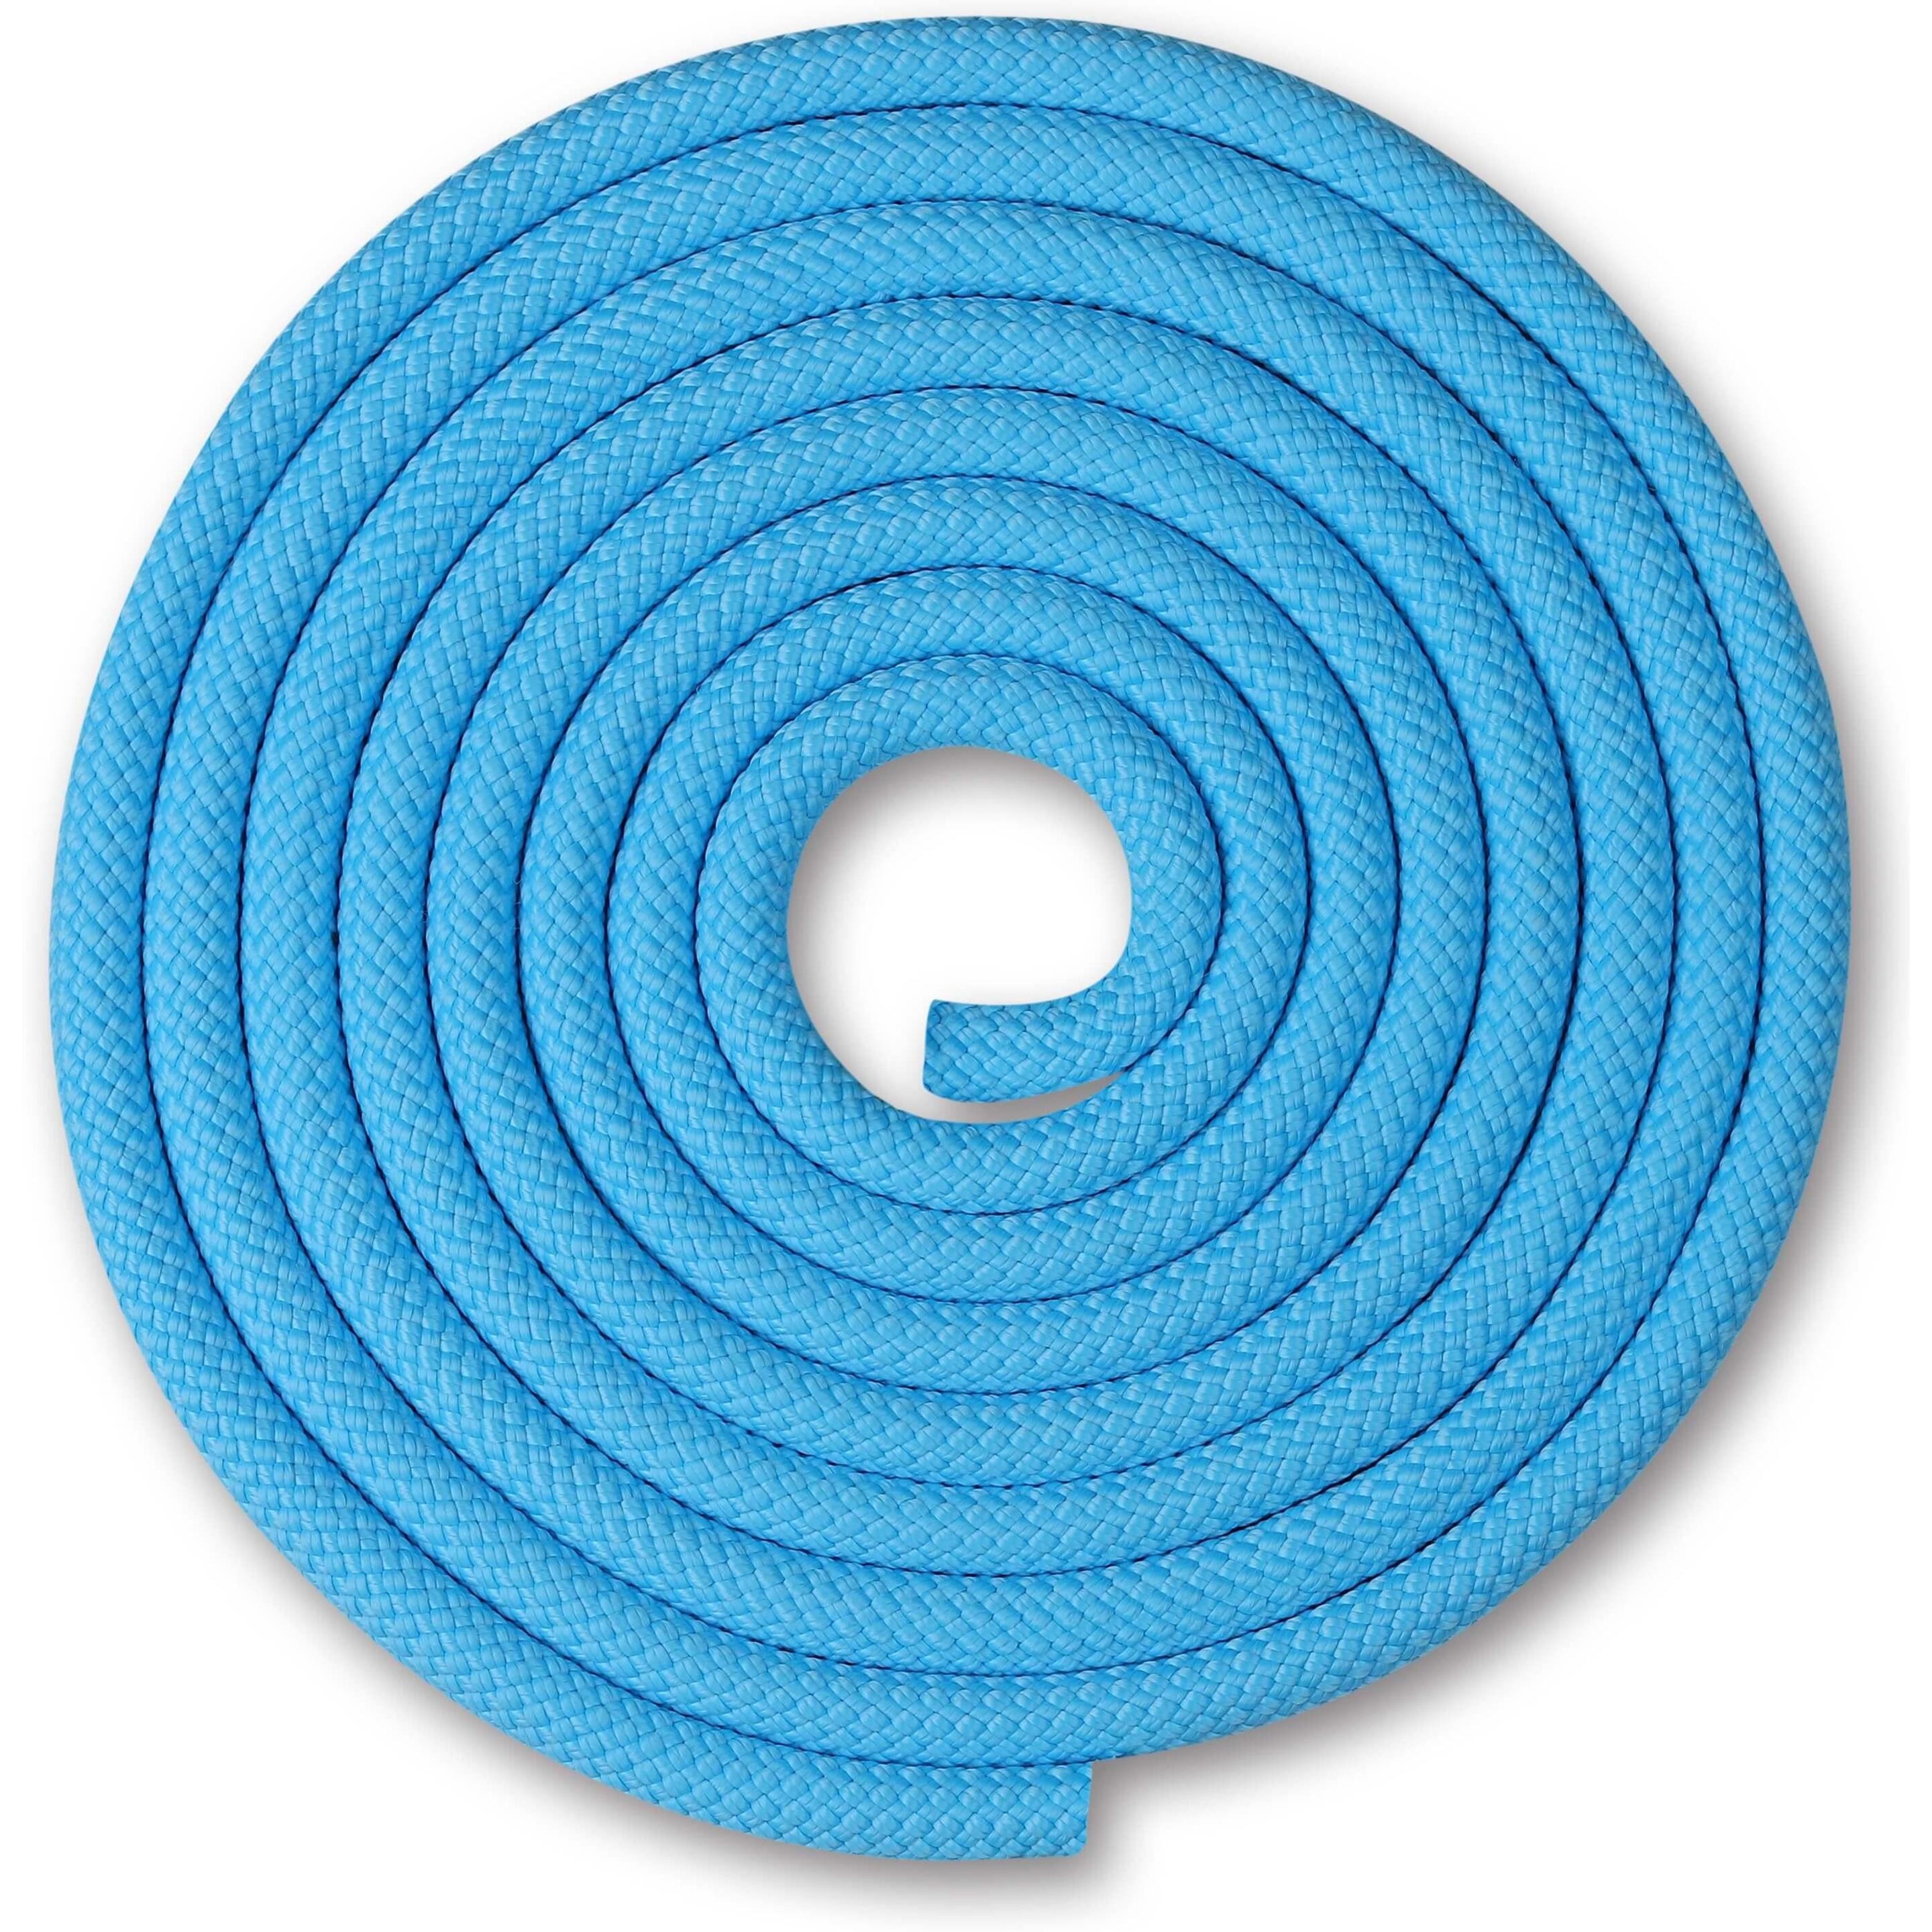 Cuerda Para Gimnasia Rítmica Ponderada 150g Indigo 2,5 M - Azul Claro  MKP